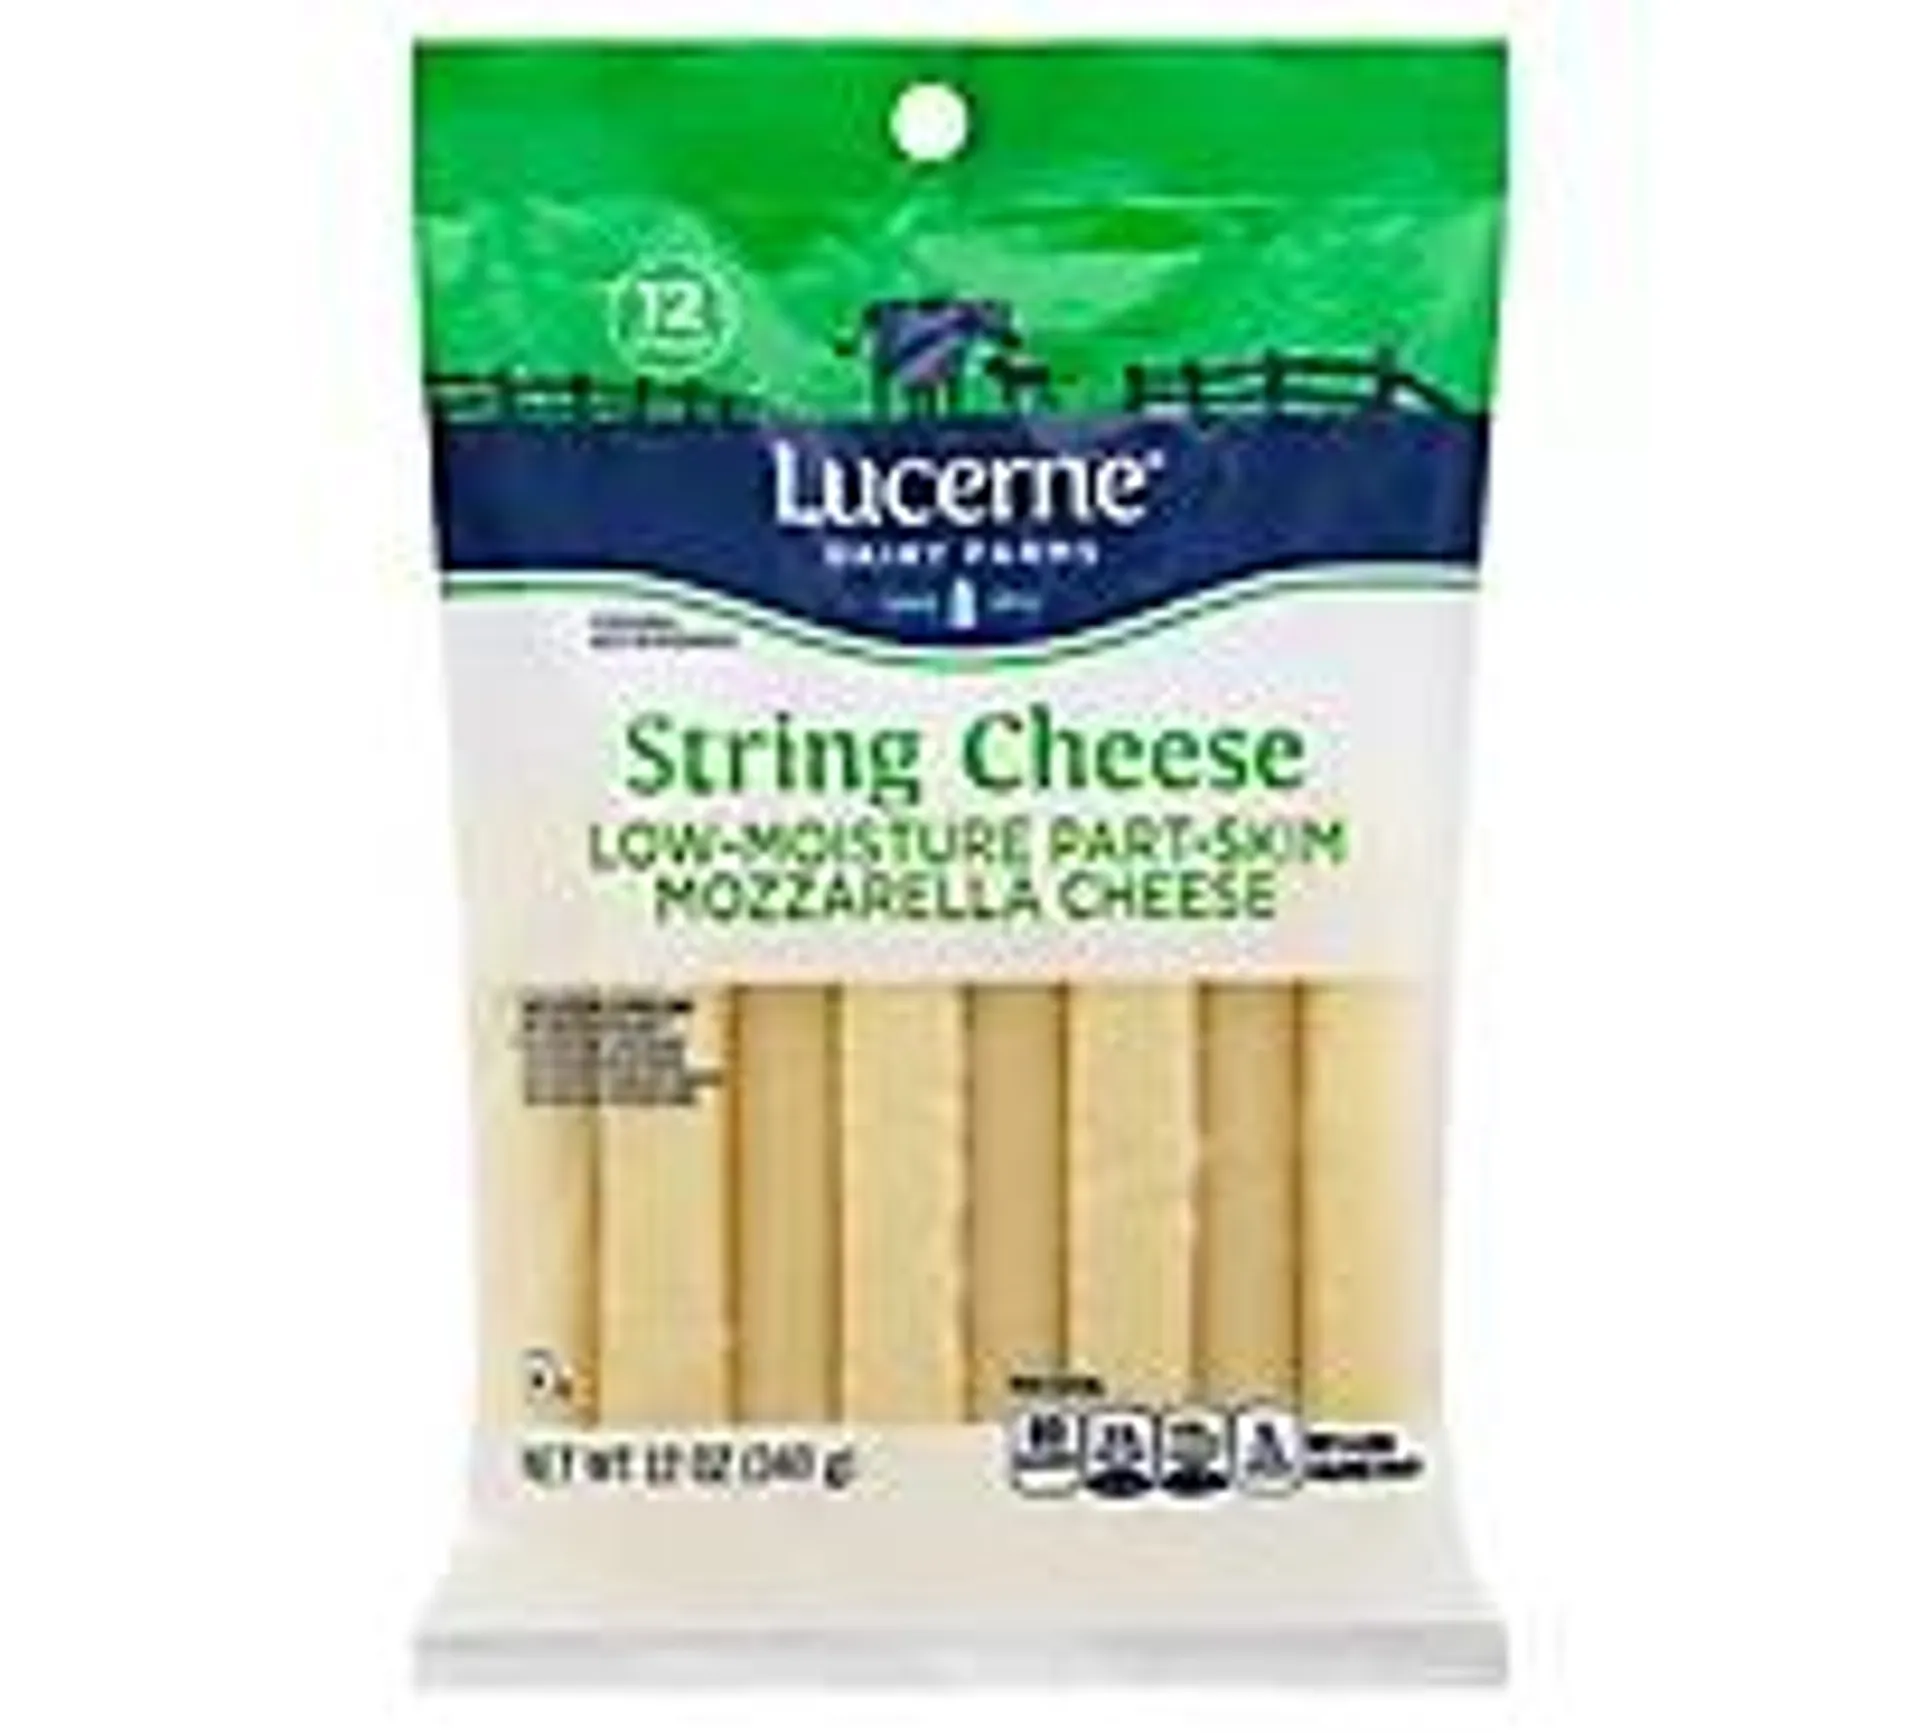 Lucerne Cheese String Cheese Mozzarella 12 Pack - 12 Oz